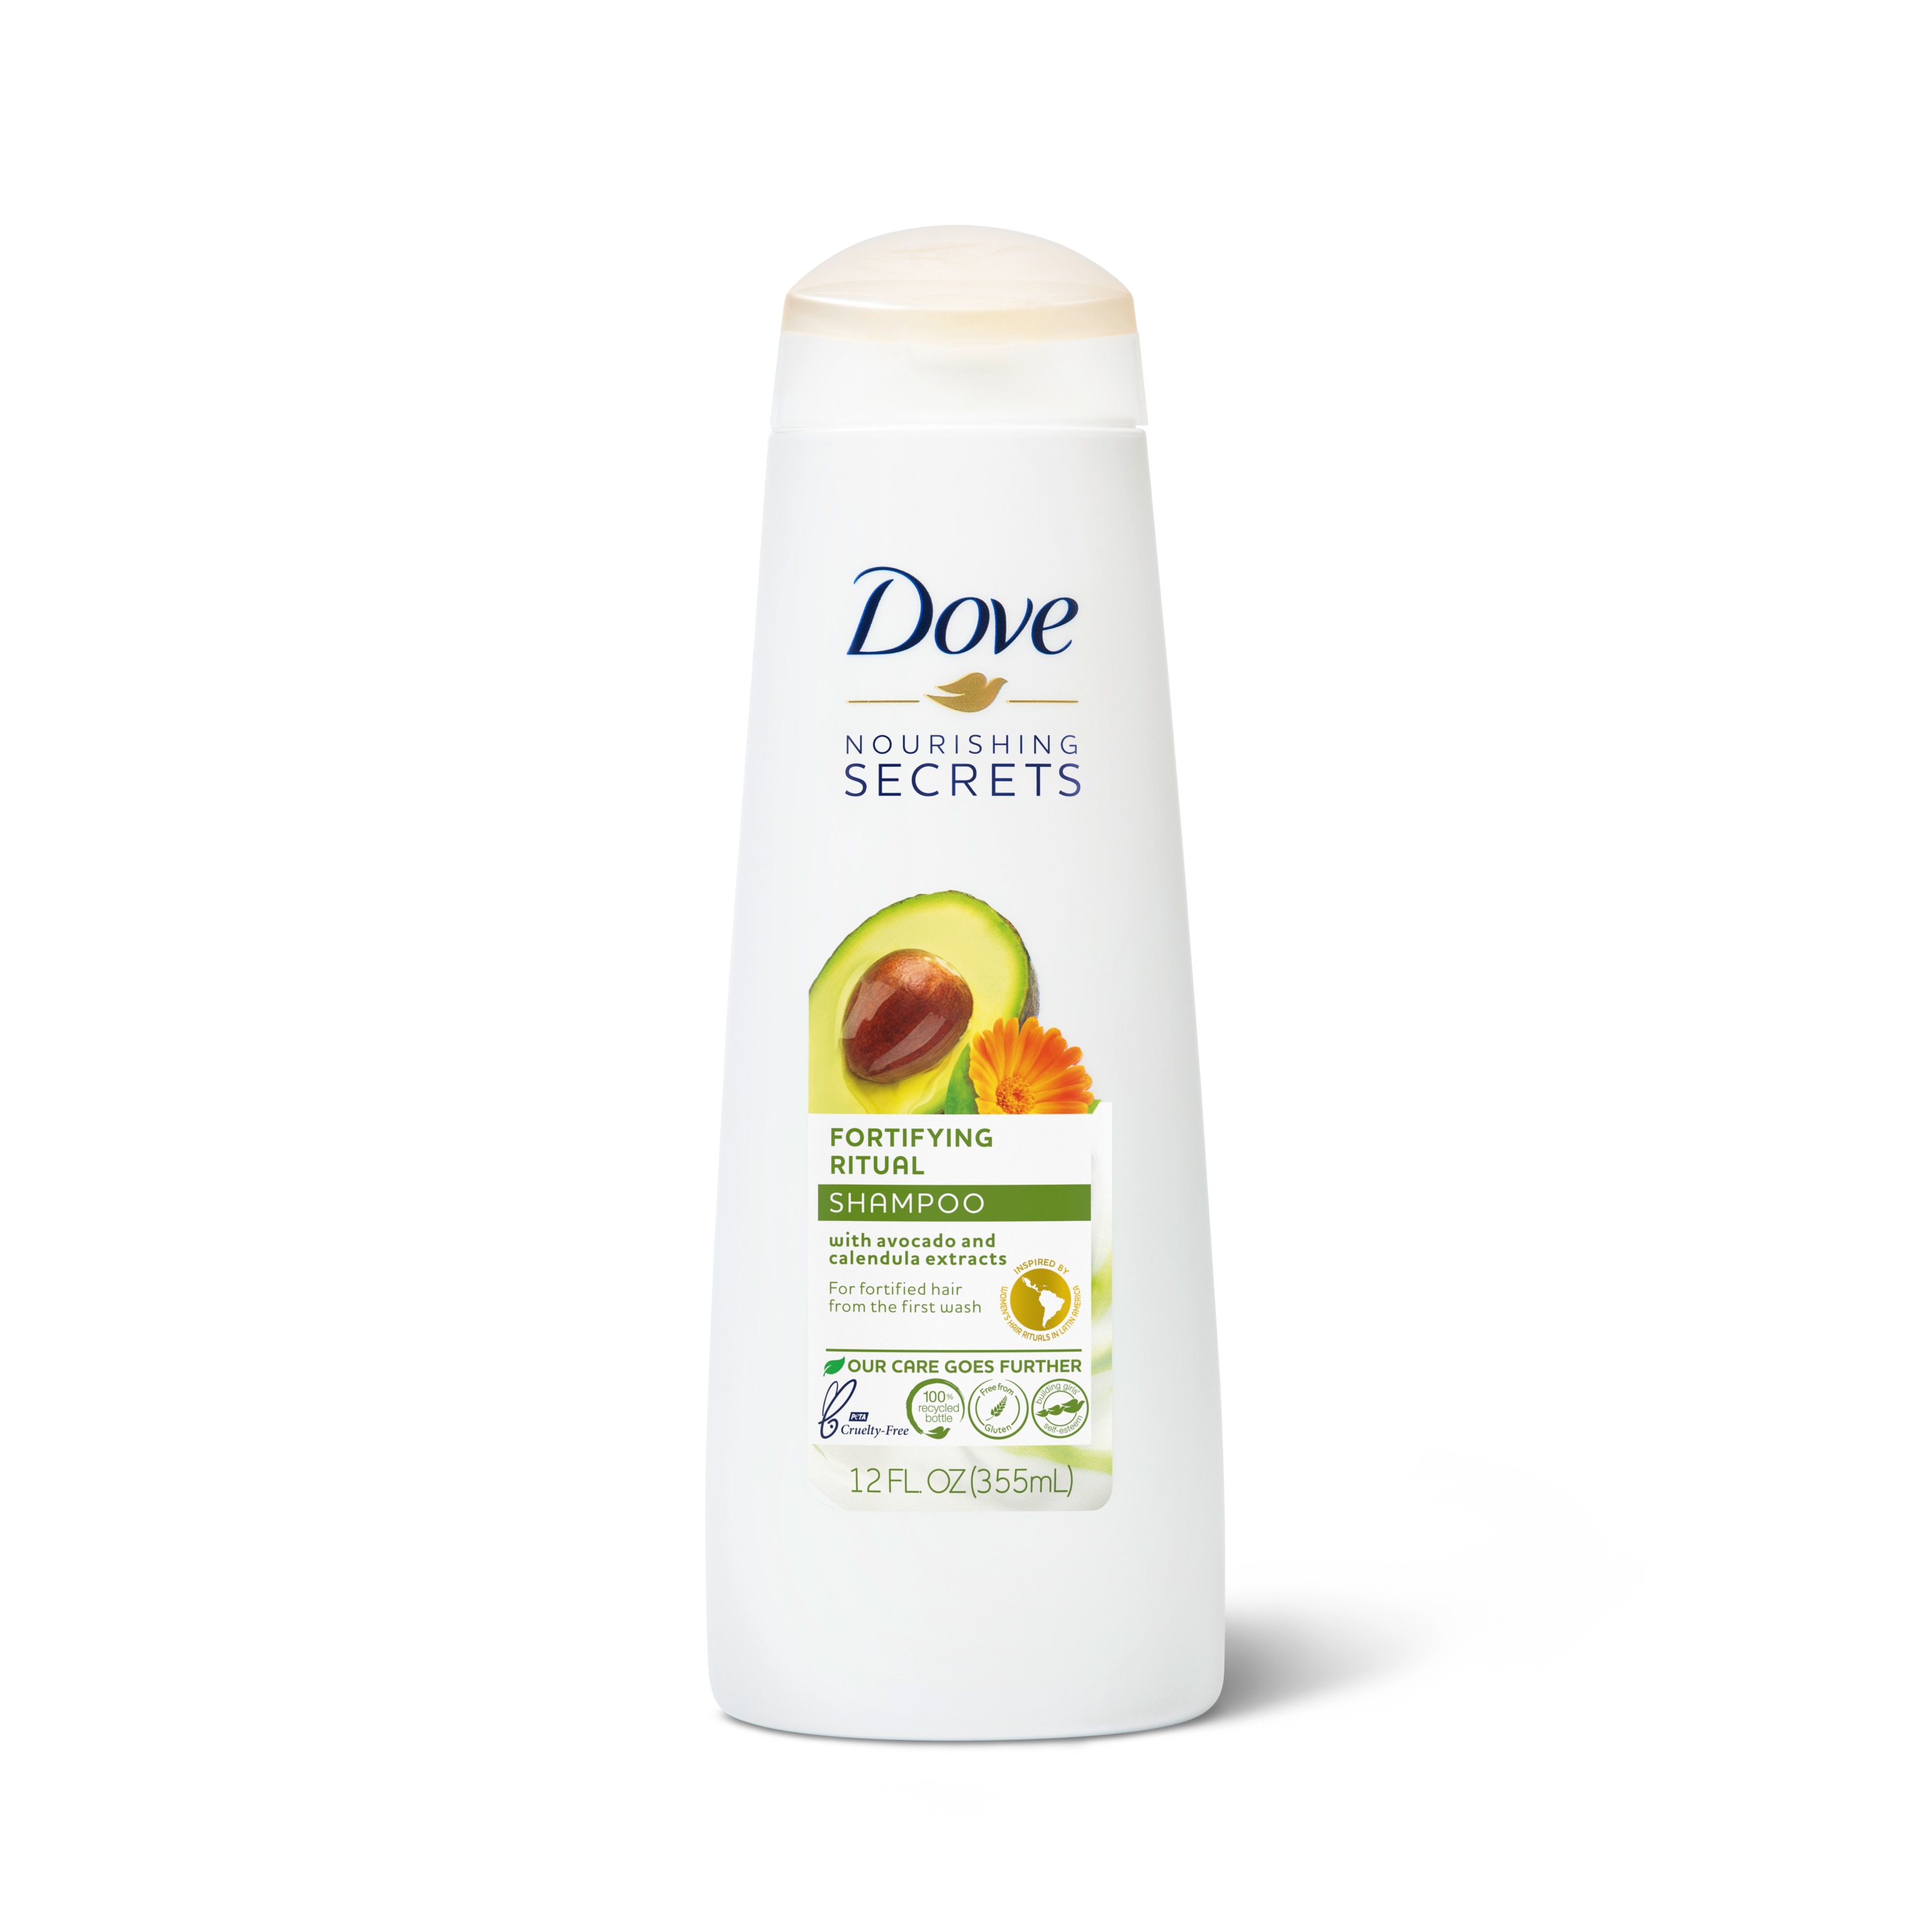 Dove Nourishing Secrets Fortifying Shampoo 12oz